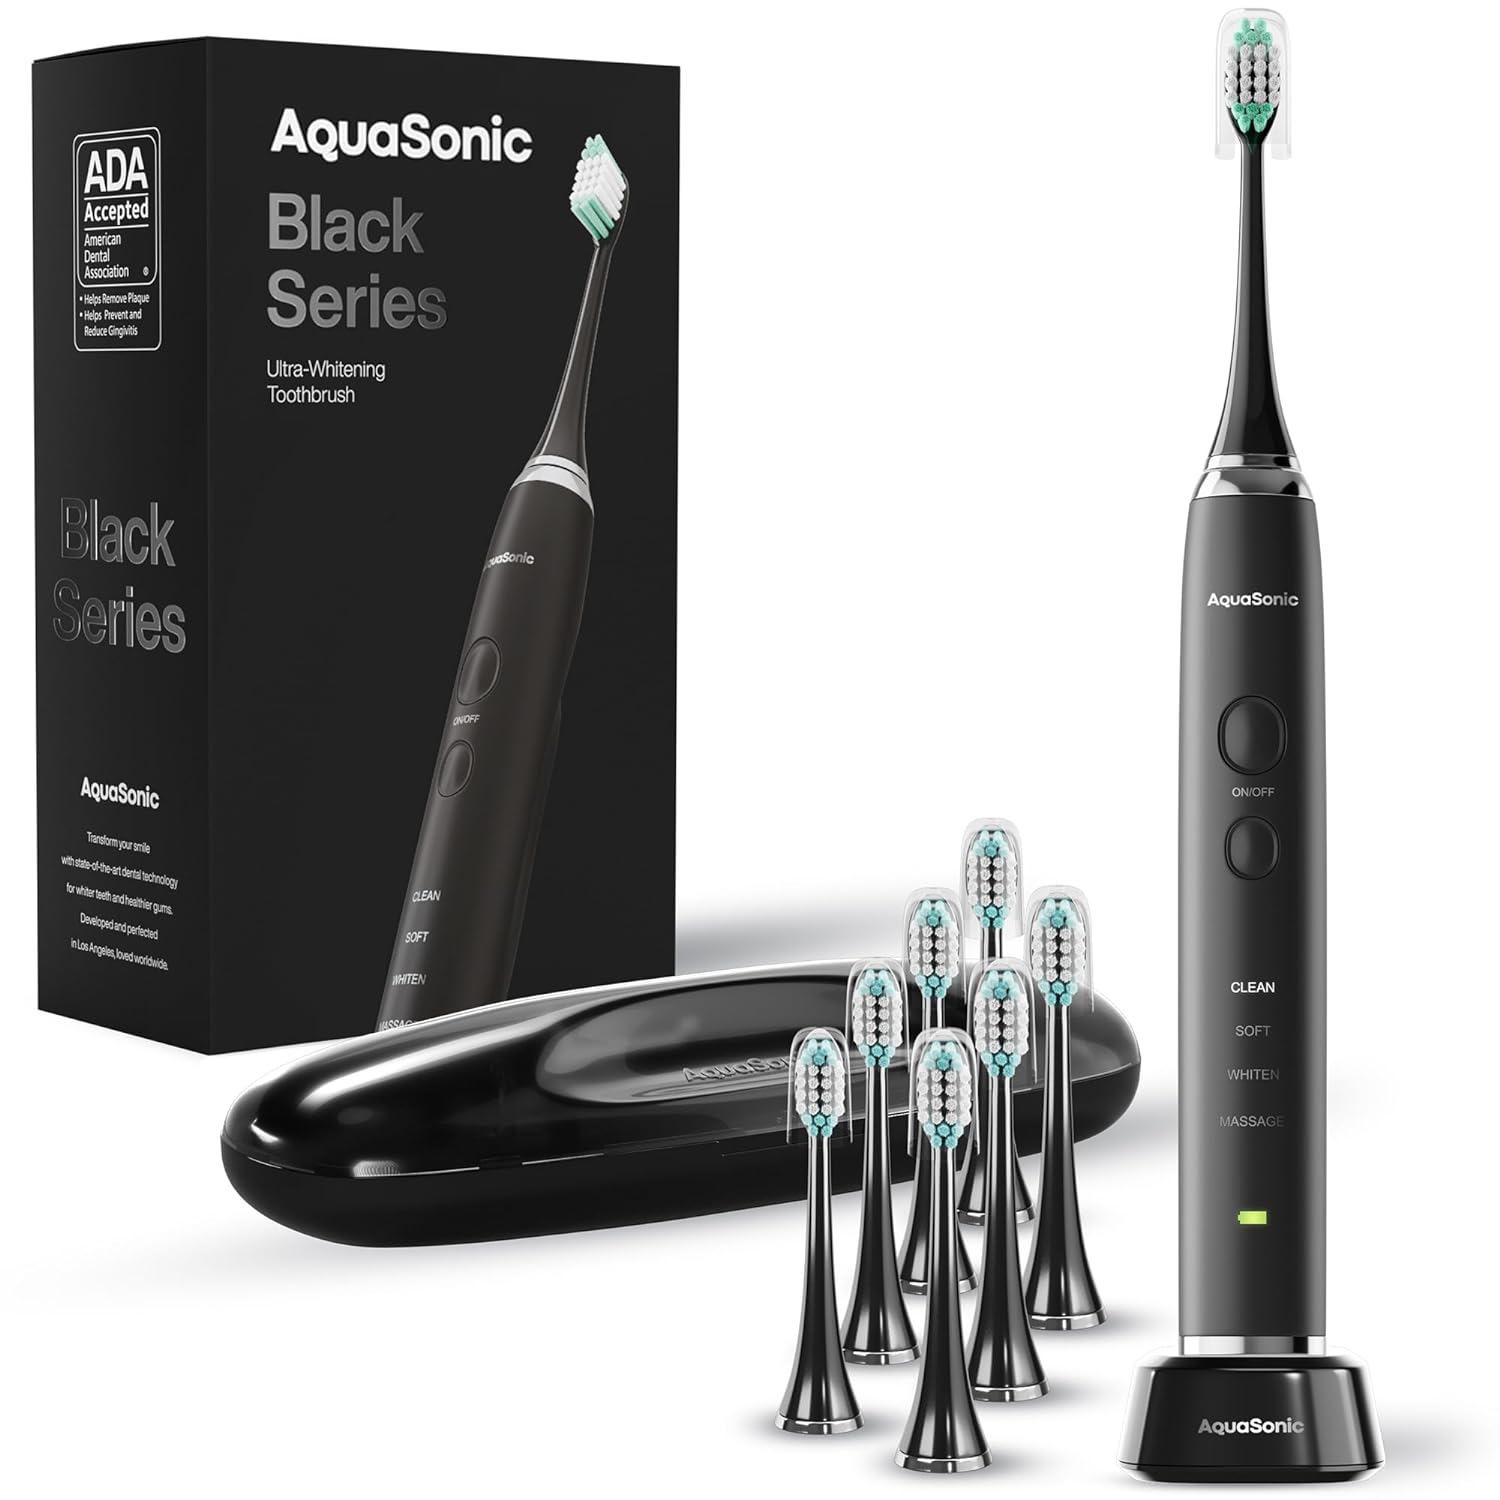 2.	AquaSonic Black Series Ultra Whitening Toothbrush